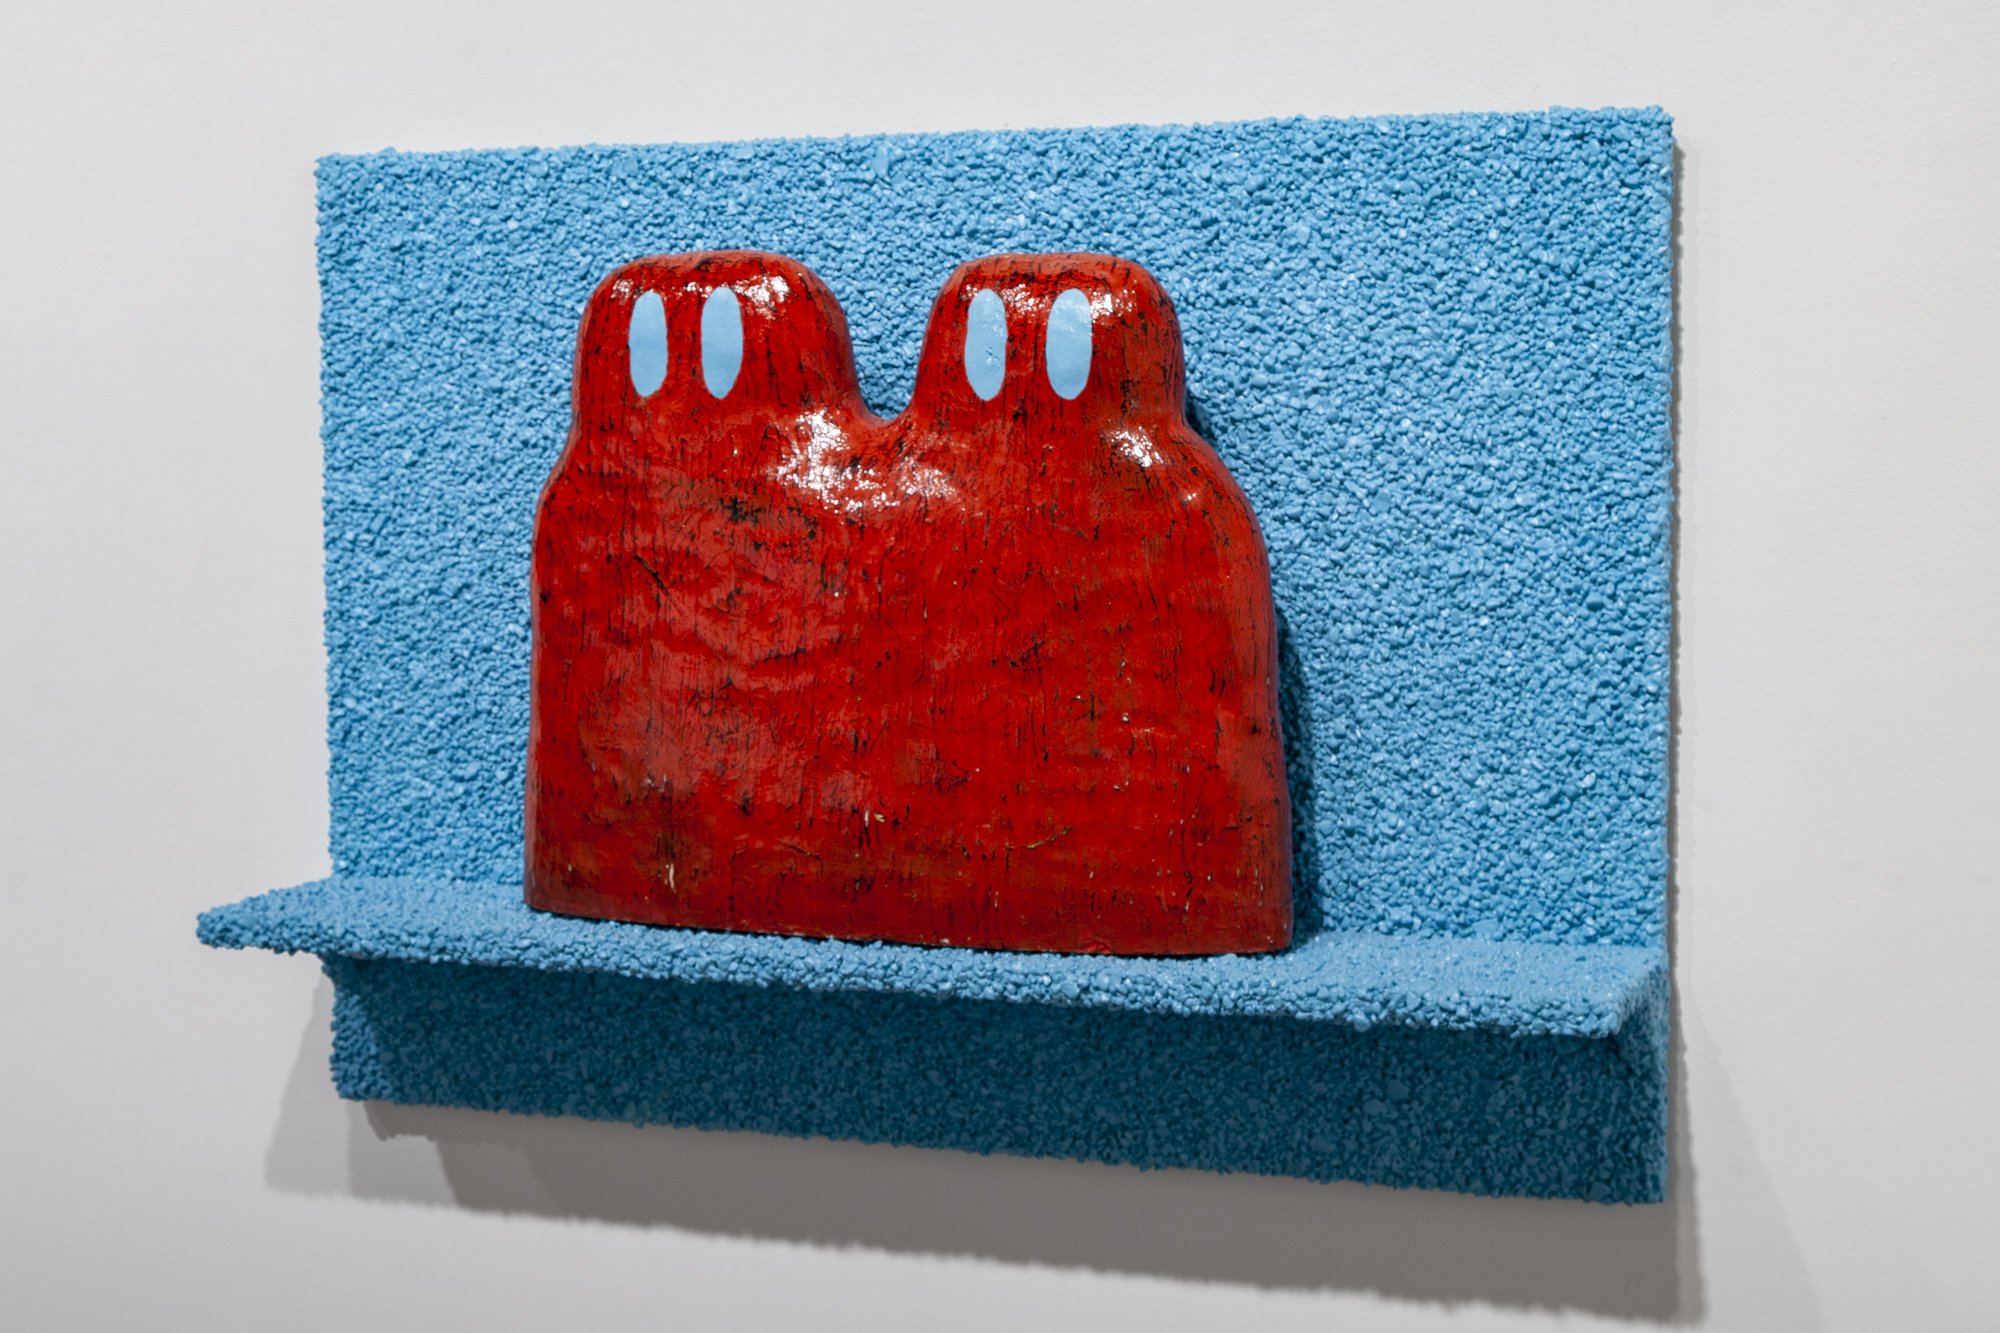  The Twins Ceramic, Glaze, Paint, Polyurethane, Pea gravel, Adhesive, Plywood 35” x 48” x 10” 2015  